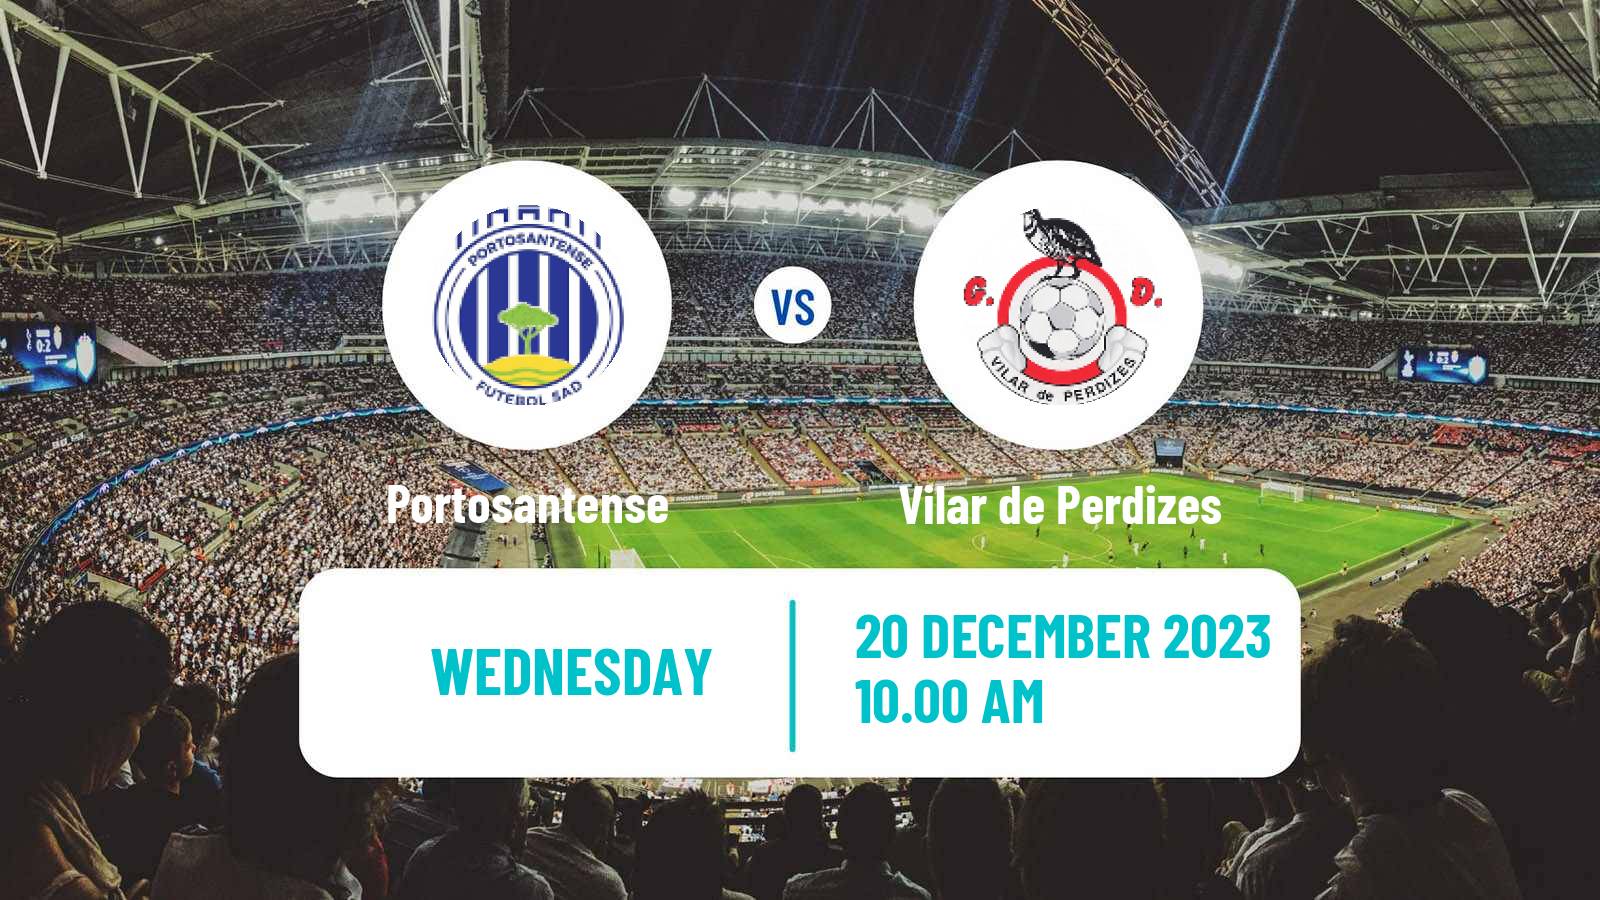 Soccer Campeonato de Portugal - Group A  Portosantense - Vilar de Perdizes